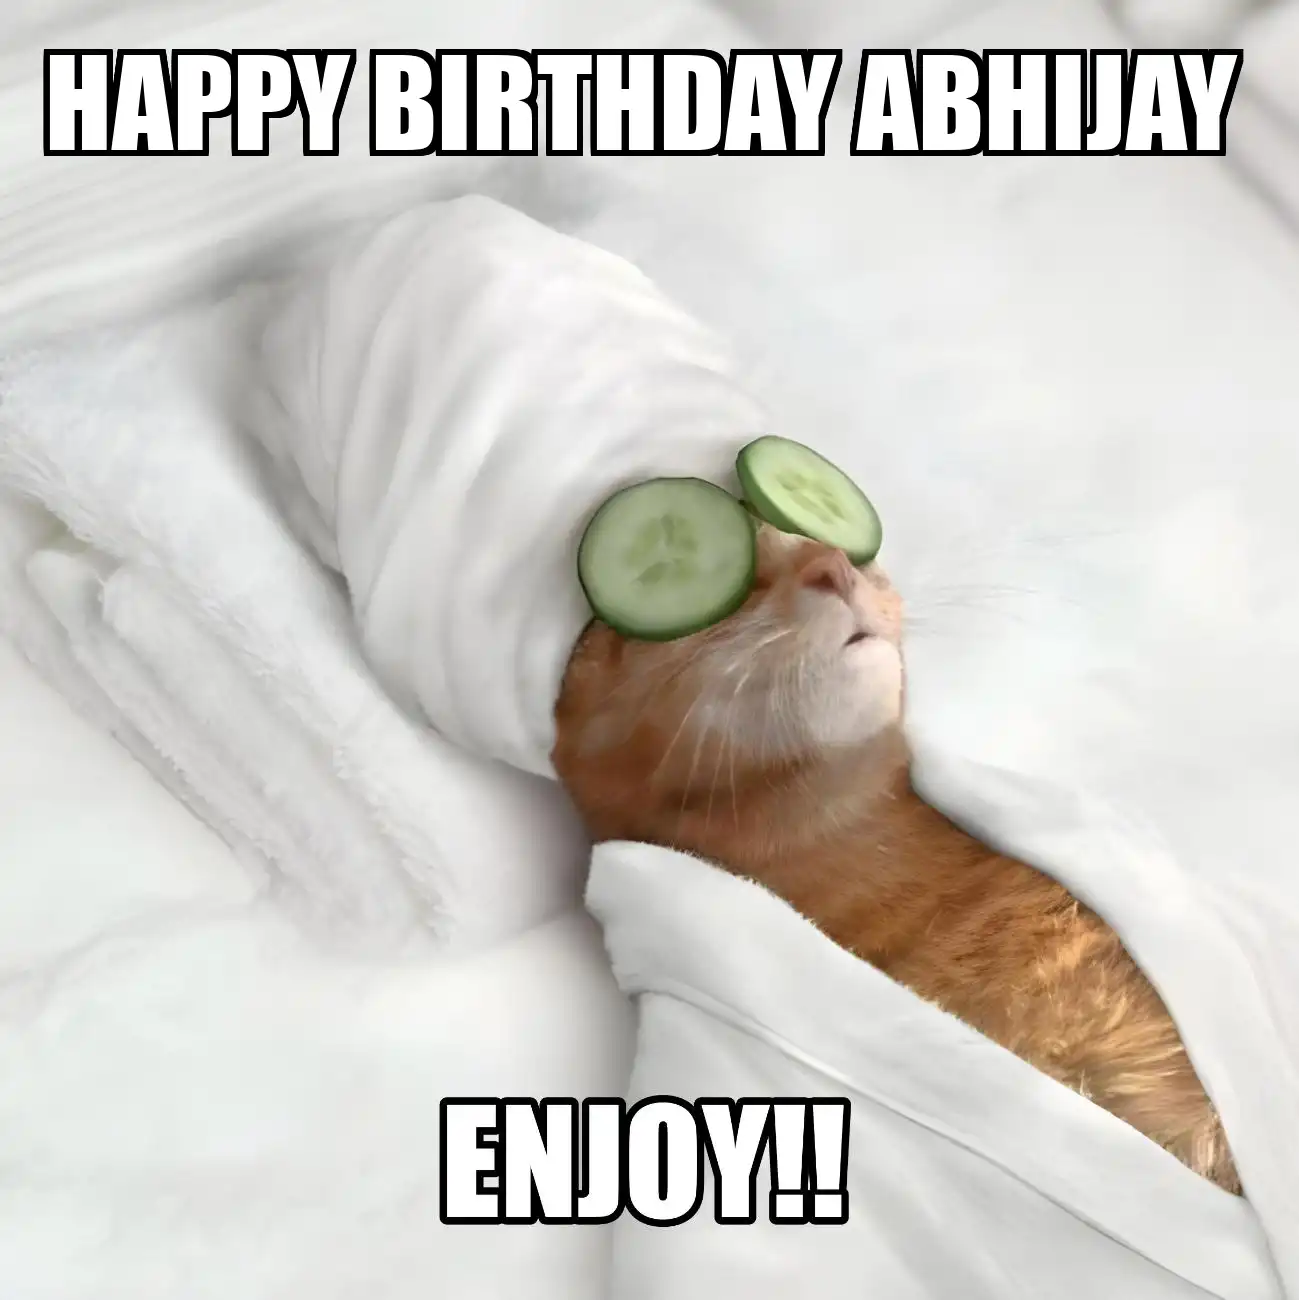 Happy Birthday Abhijay Enjoy Cat Meme